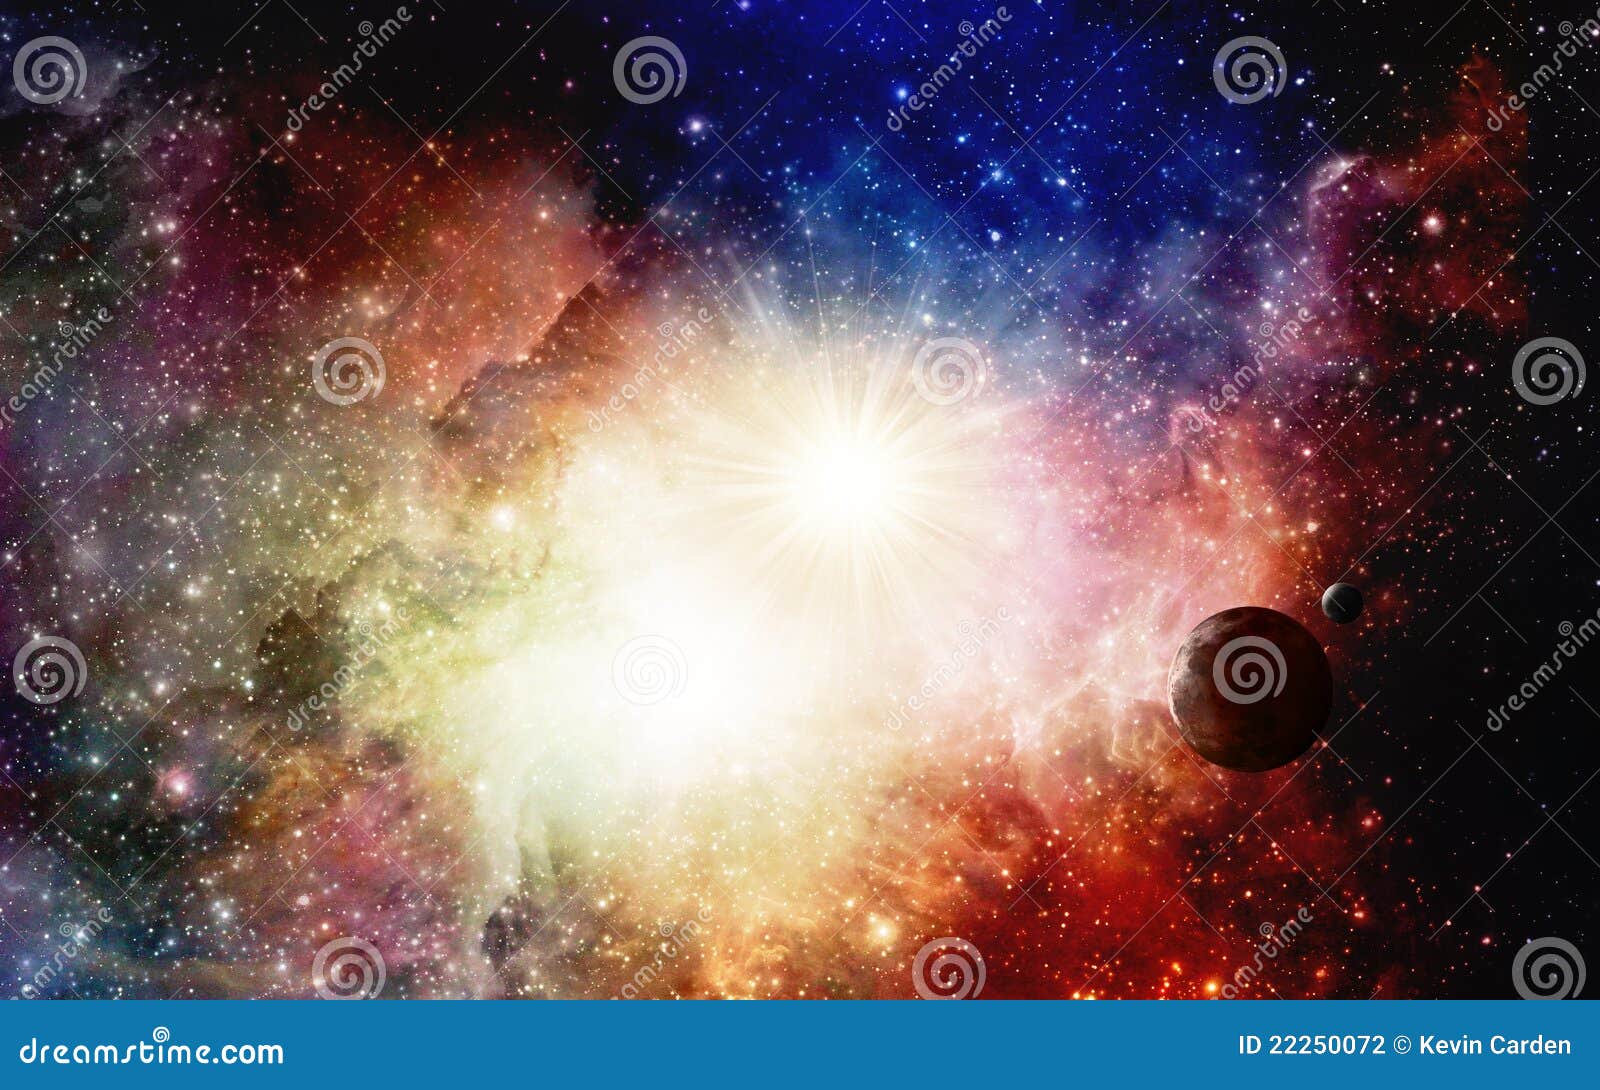 colorful nebulae and supernova with planets